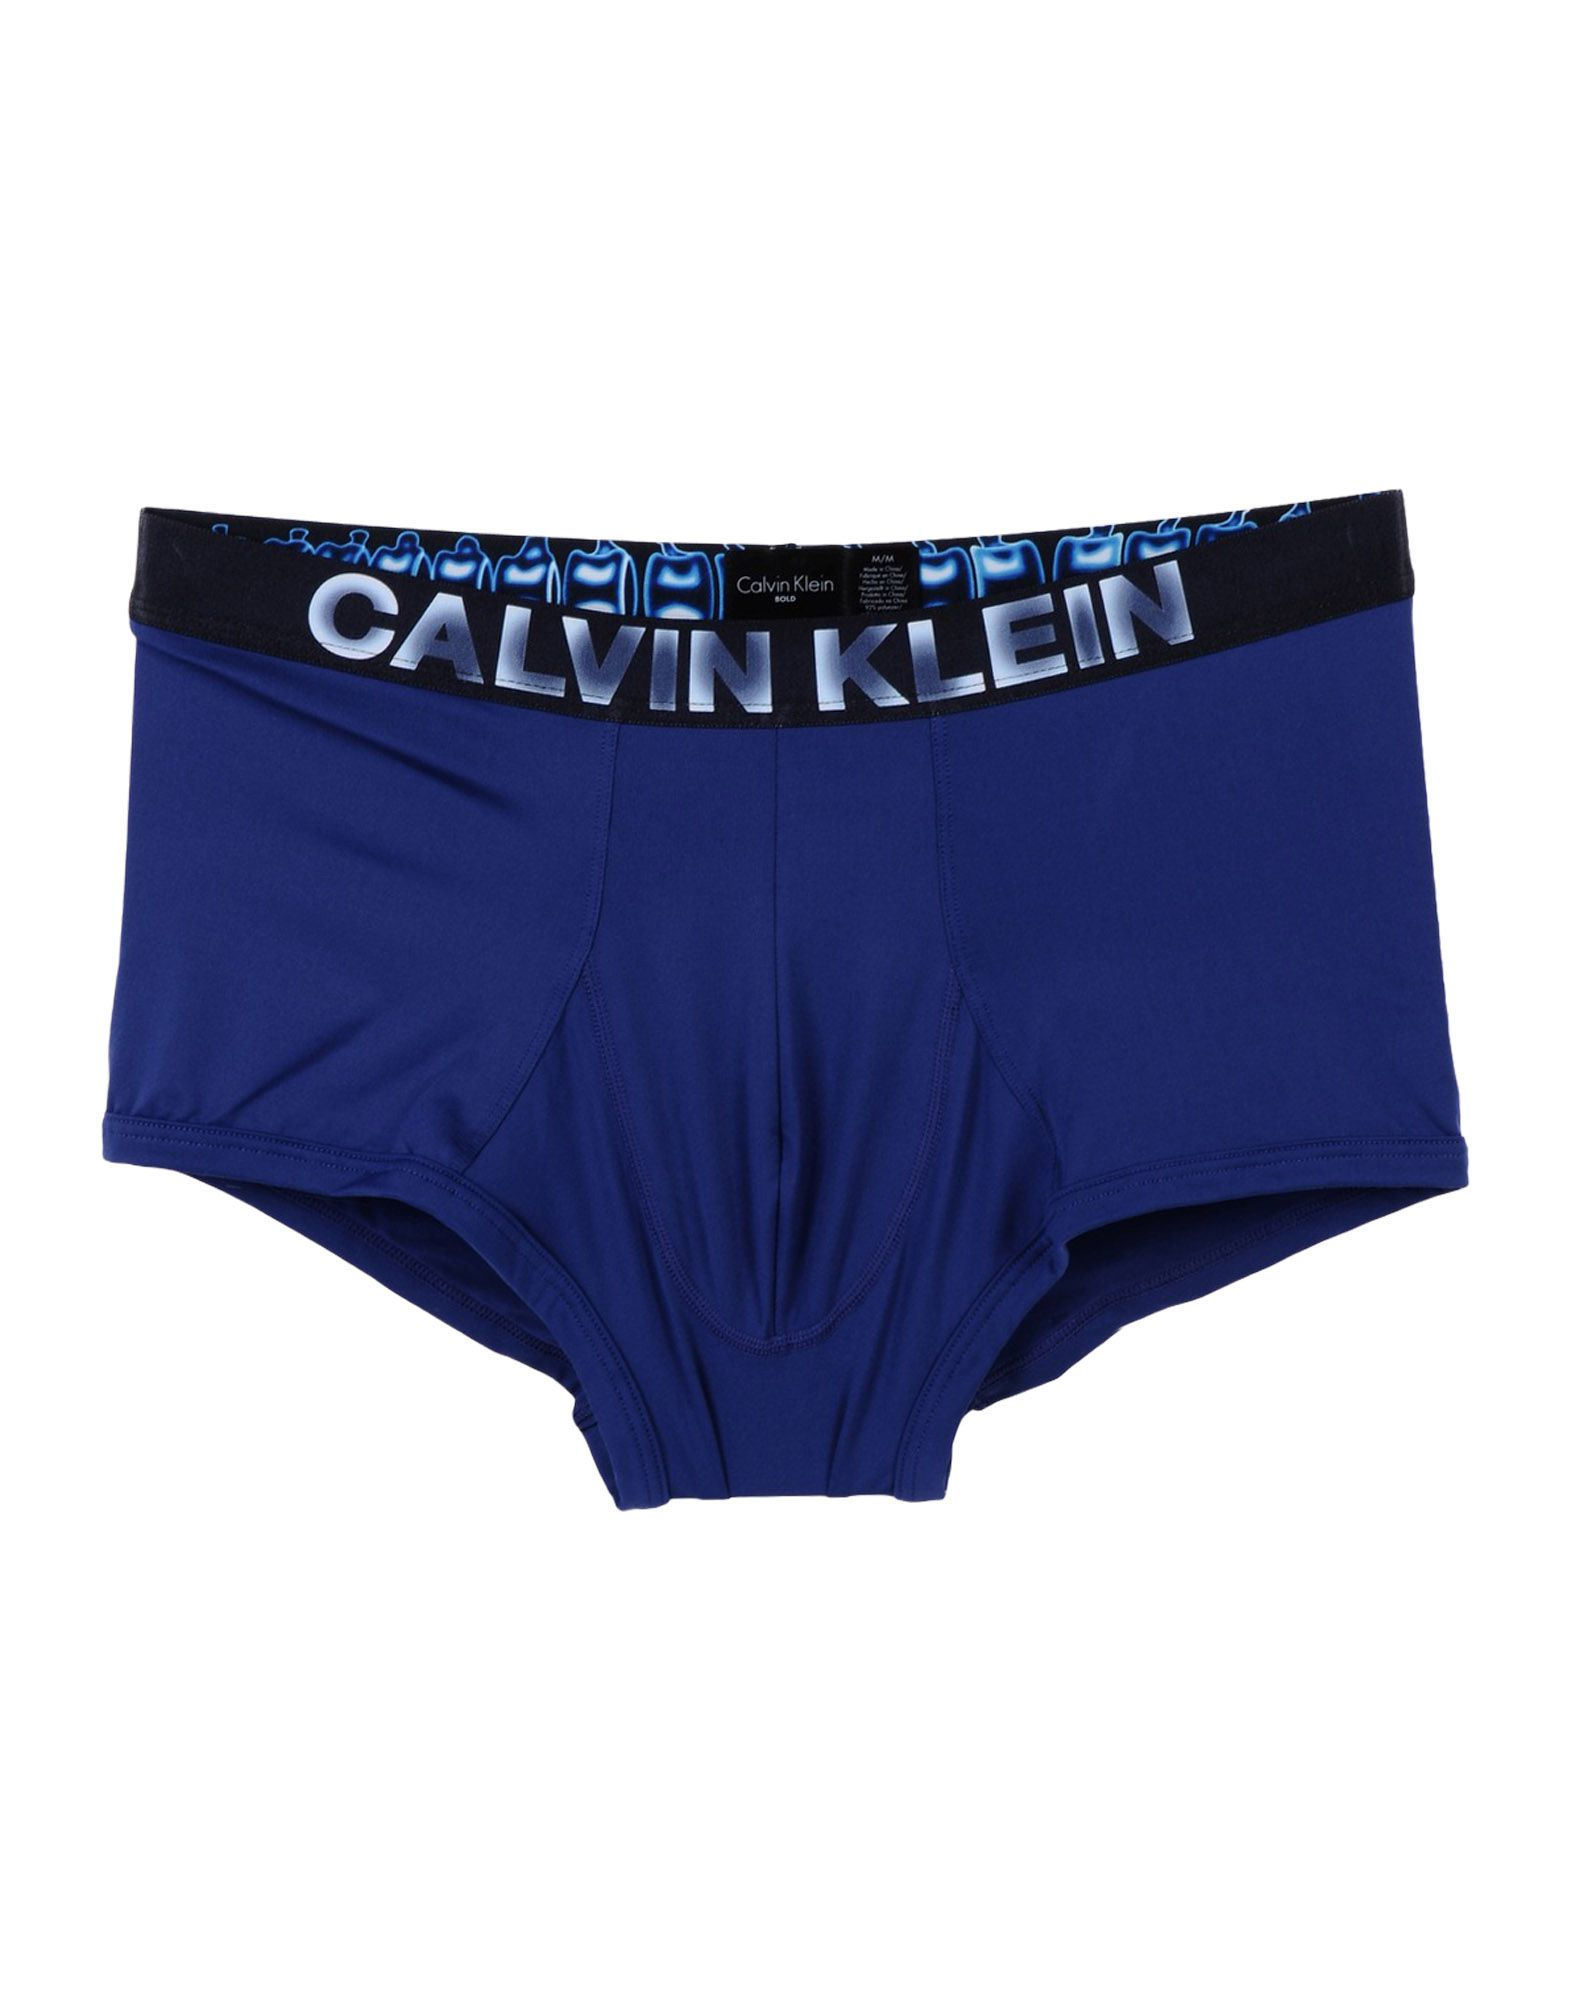 Lyst - Calvin Klein Boxer in Blue for Men